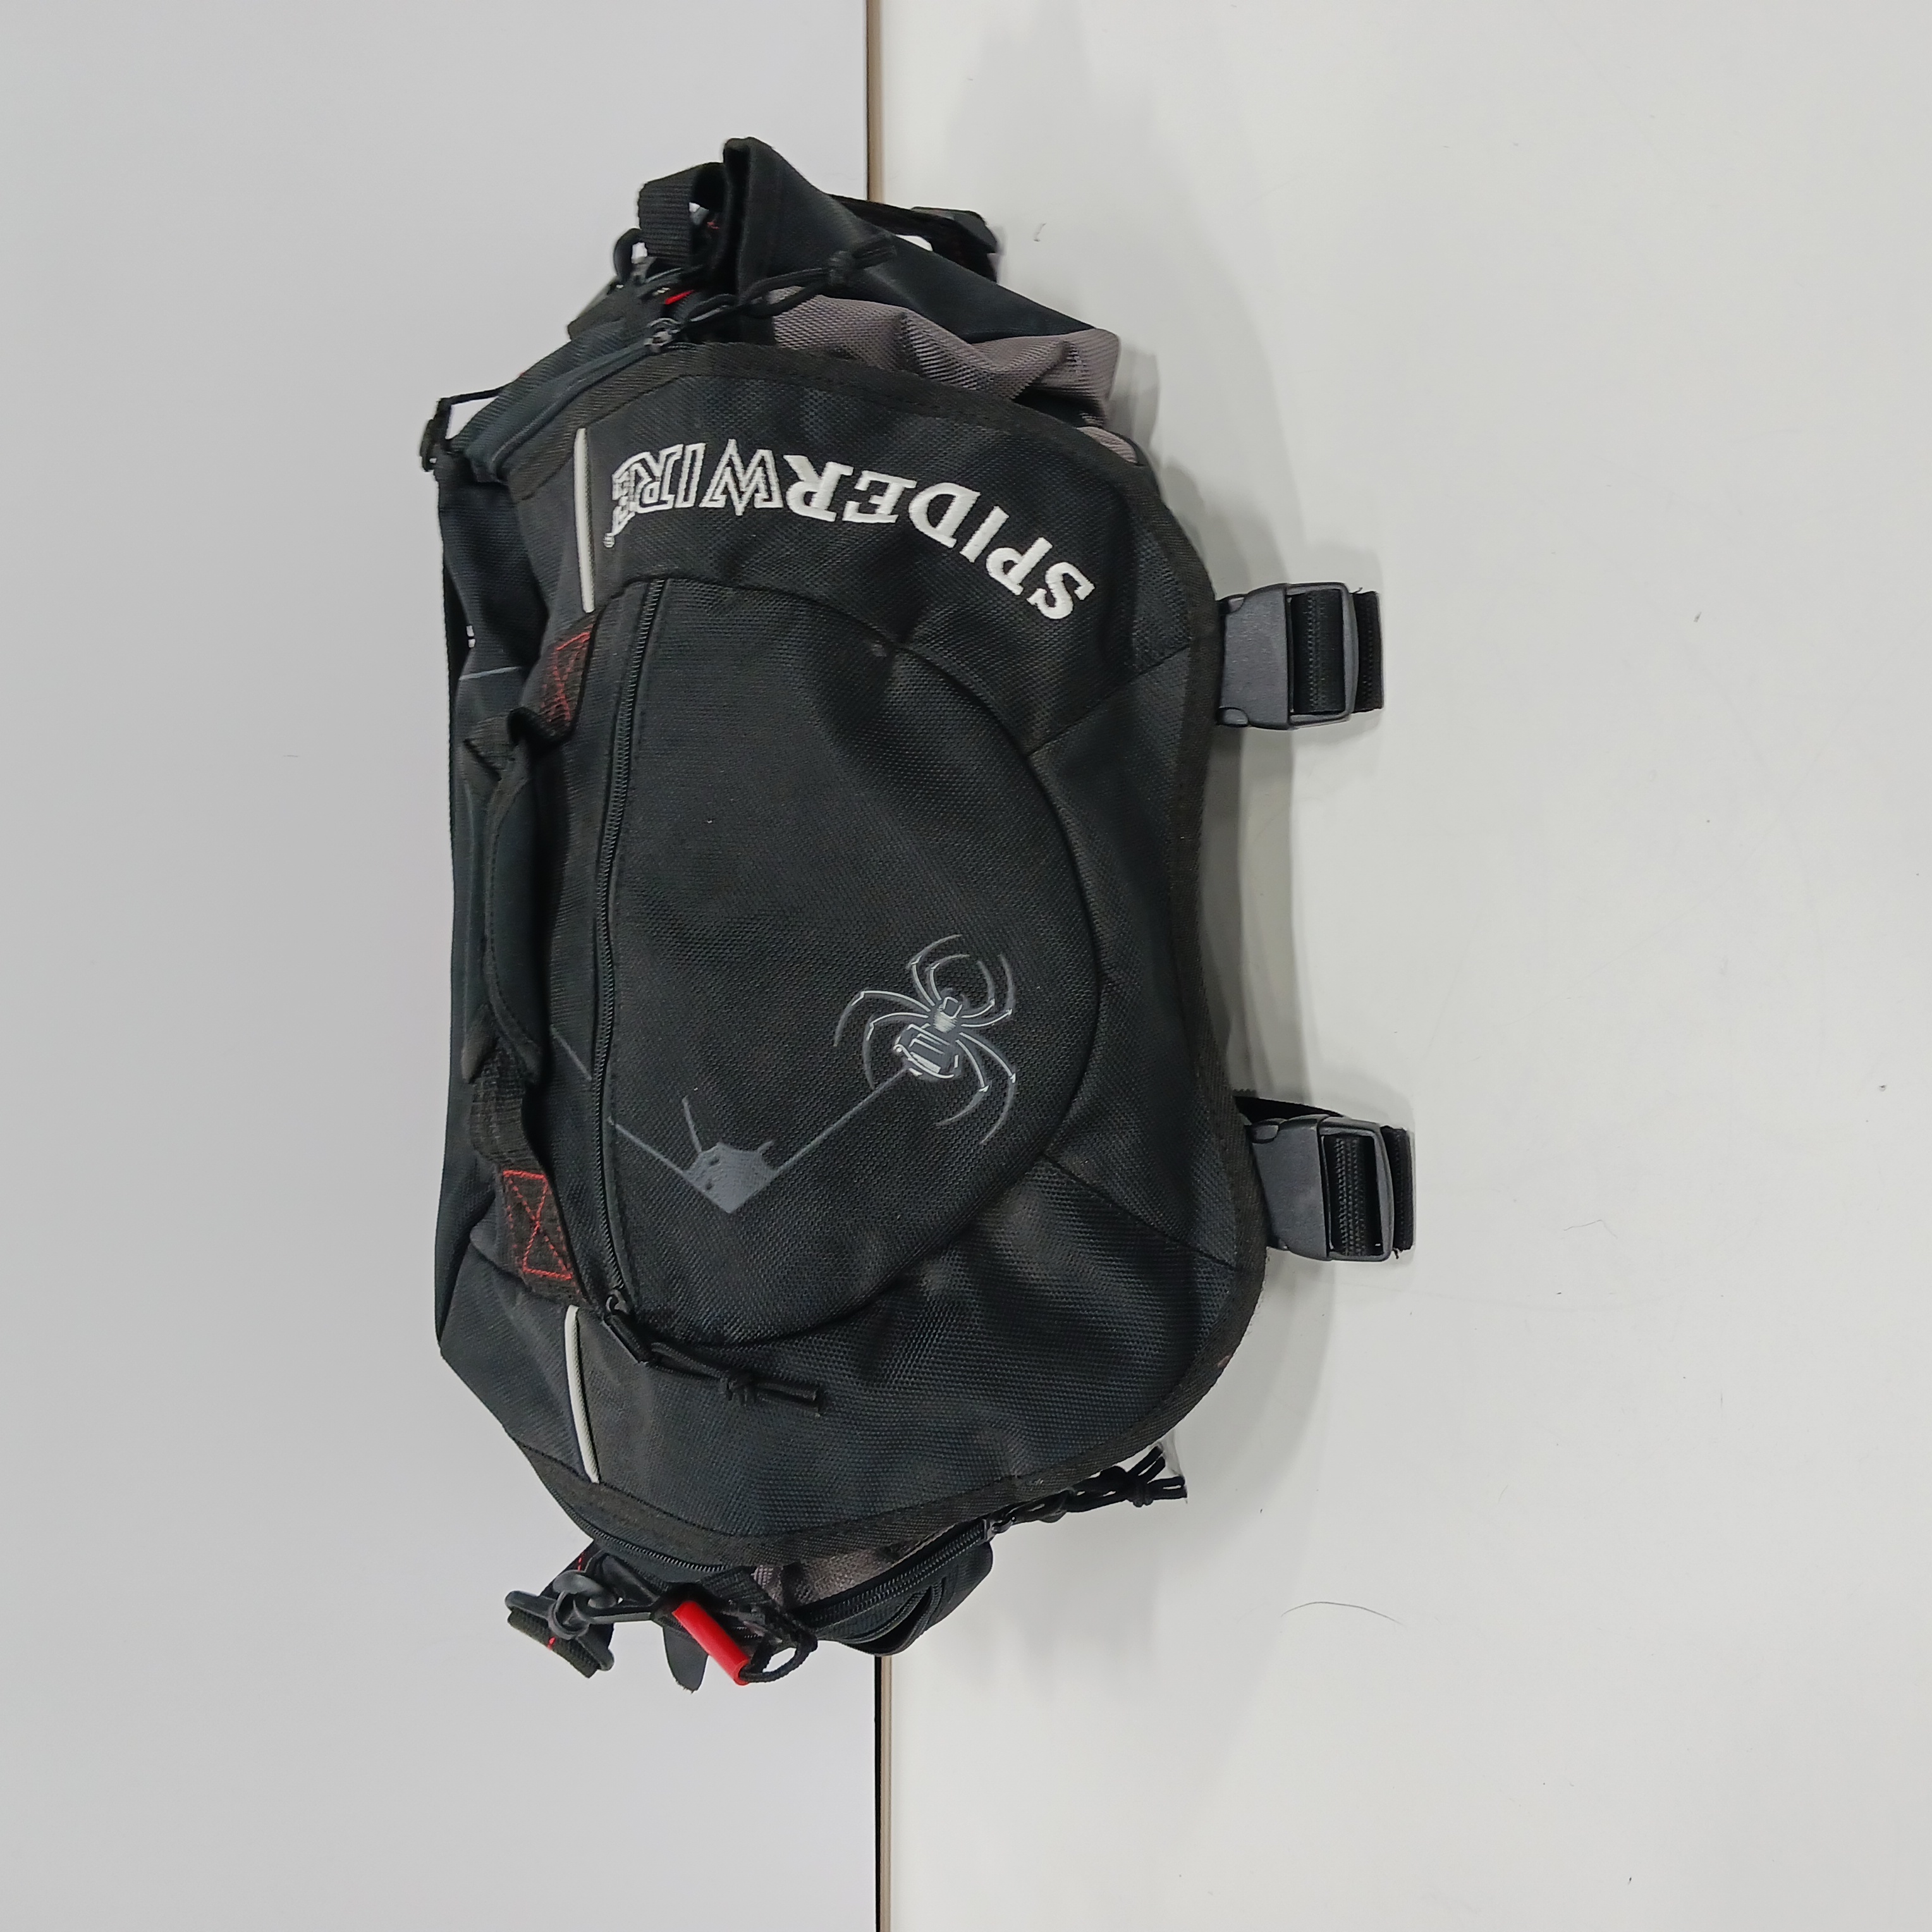 Spiderwire Wolf Tackle Bag, 38.8-Liter, Black